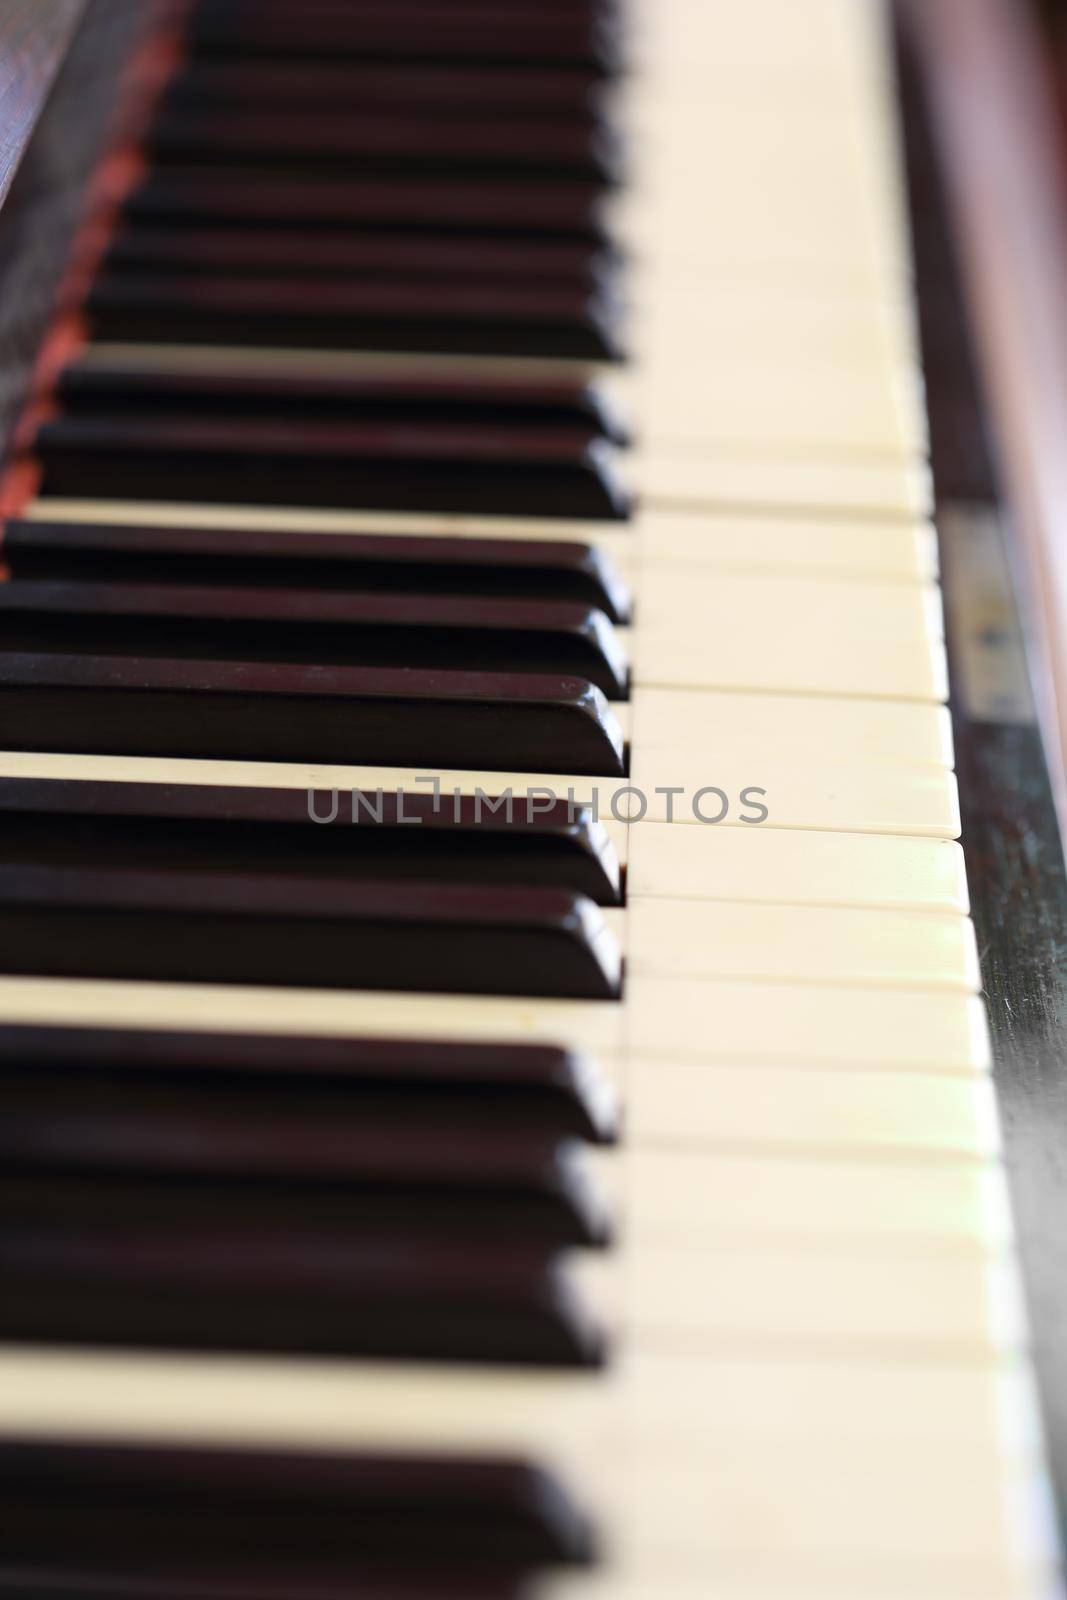 piano keys and wood grain  by geargodz